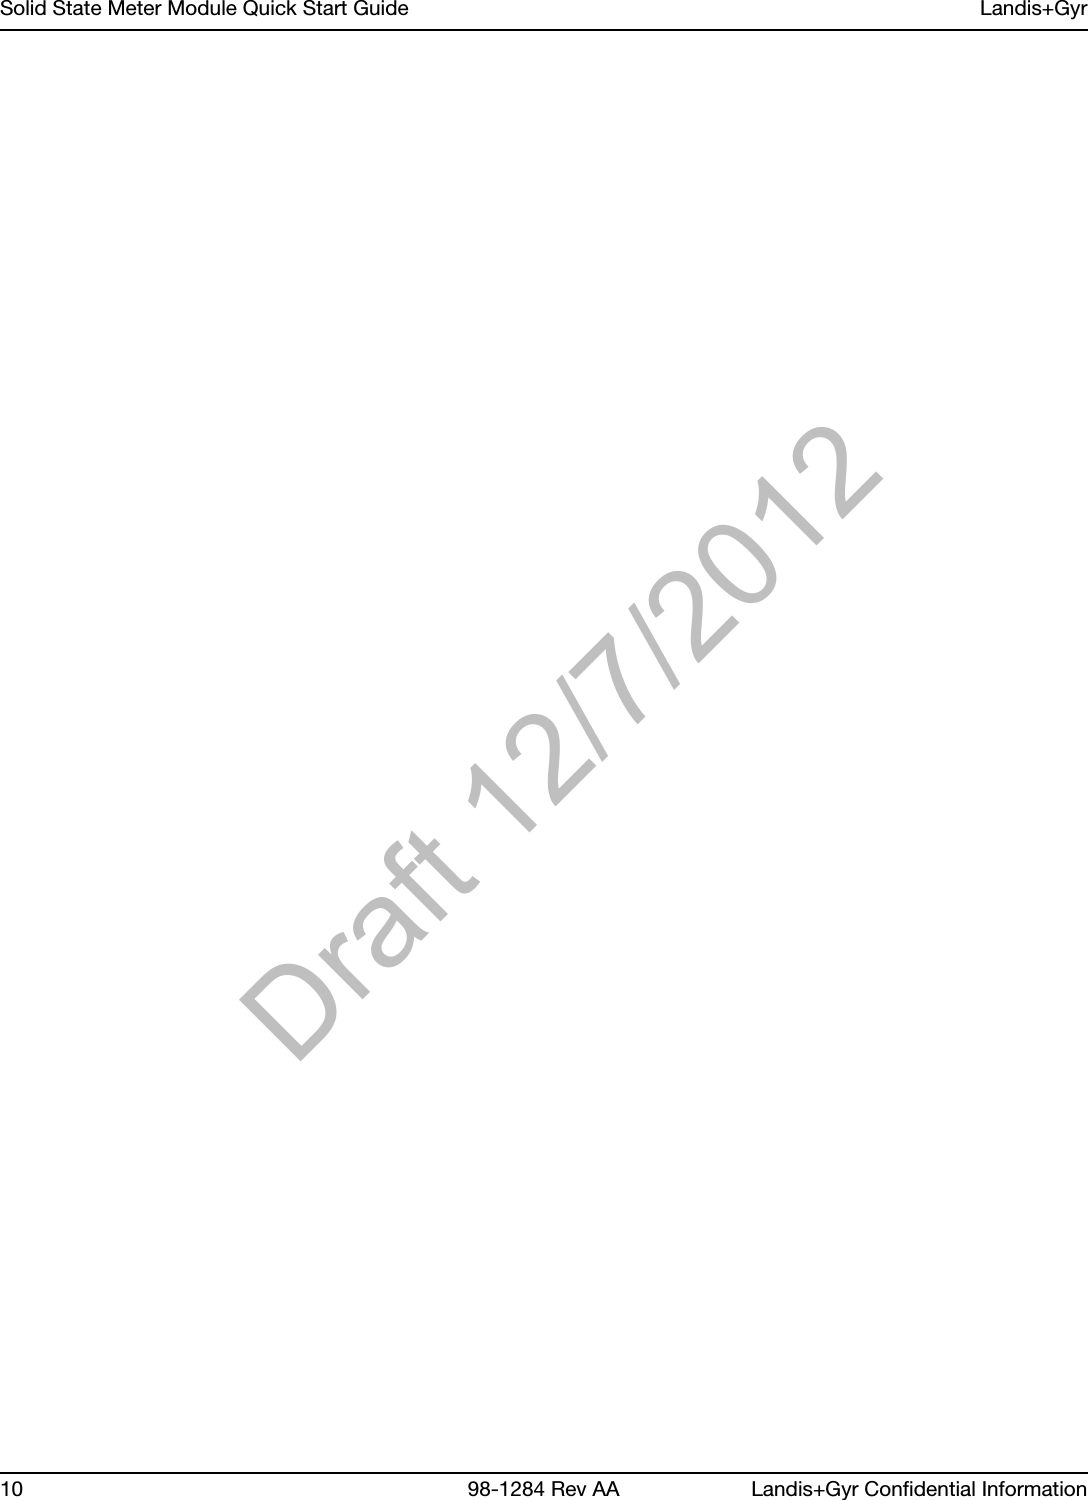 Draft 12/7/2012Solid State Meter Module Quick Start Guide Landis+Gyr10 98-1284 Rev AA Landis+Gyr Confidential Information